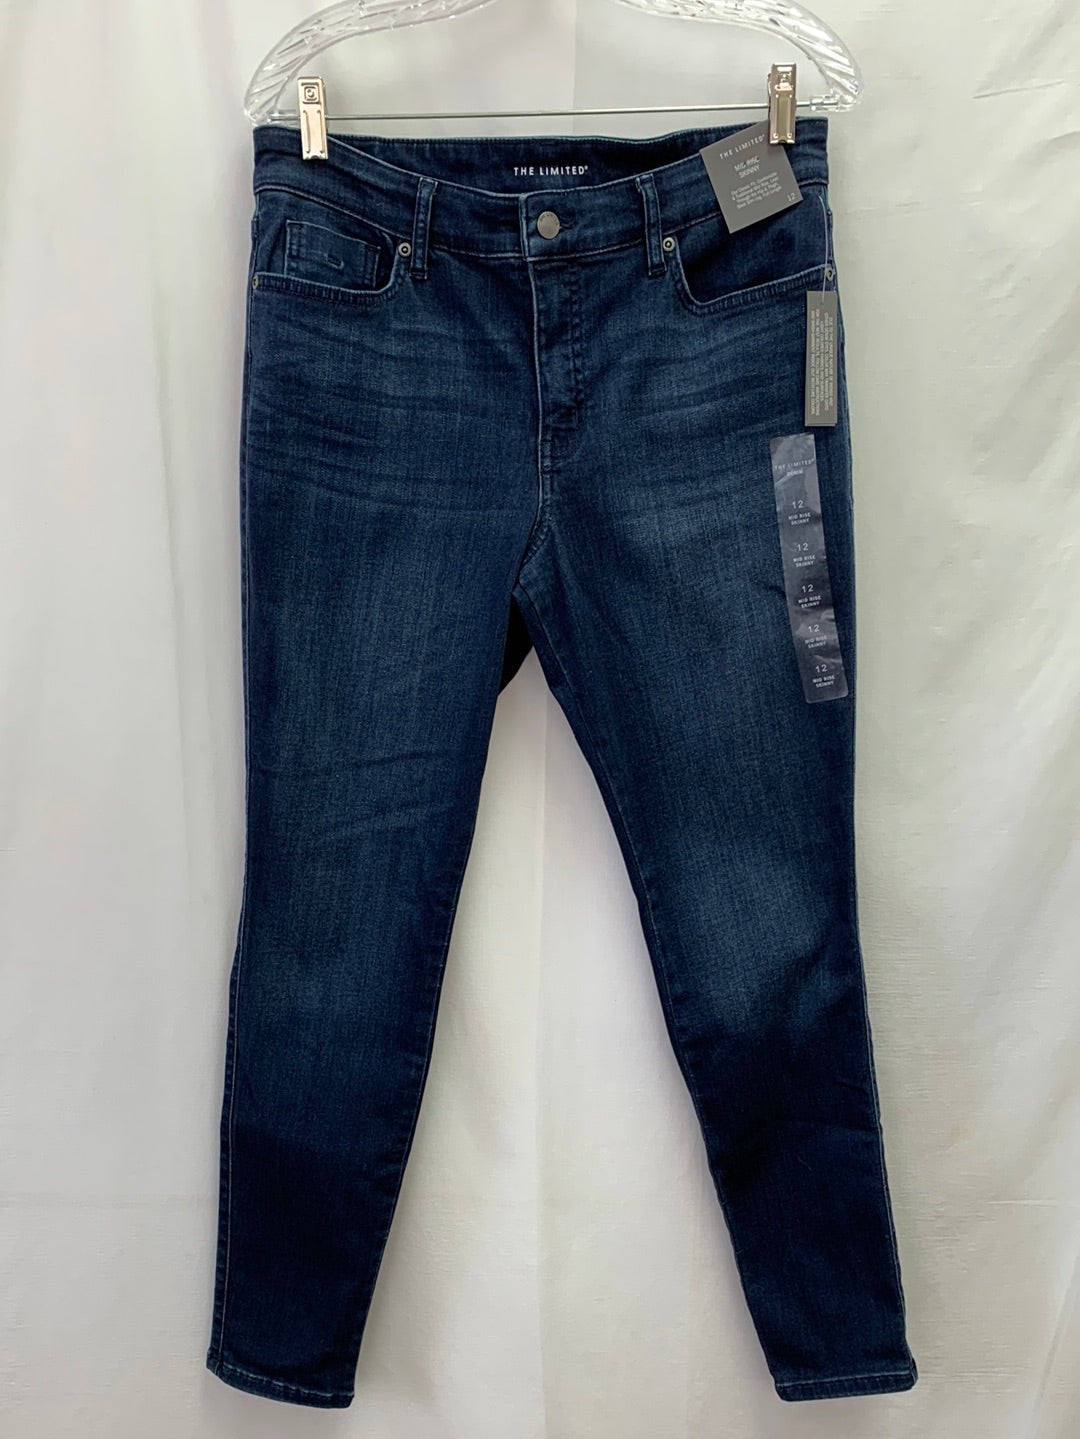 NWT - THE LIMITED dark wash Indigo Dyed Mid Rise Stretch Skinny Jeans - 12